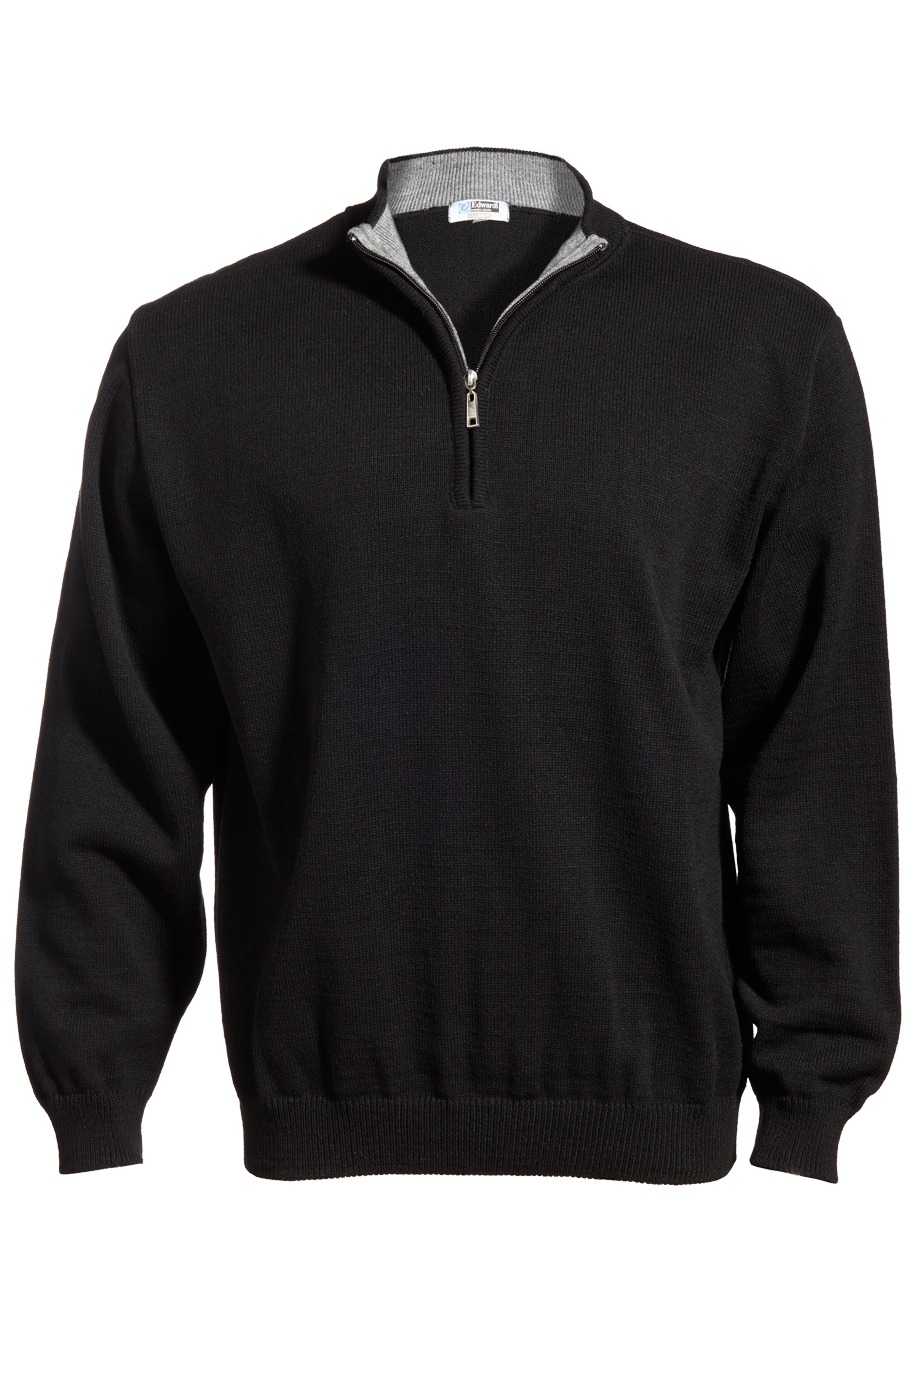 Edwards Garment 4012 - Men's Quarter-Zip Acrylic Sweater